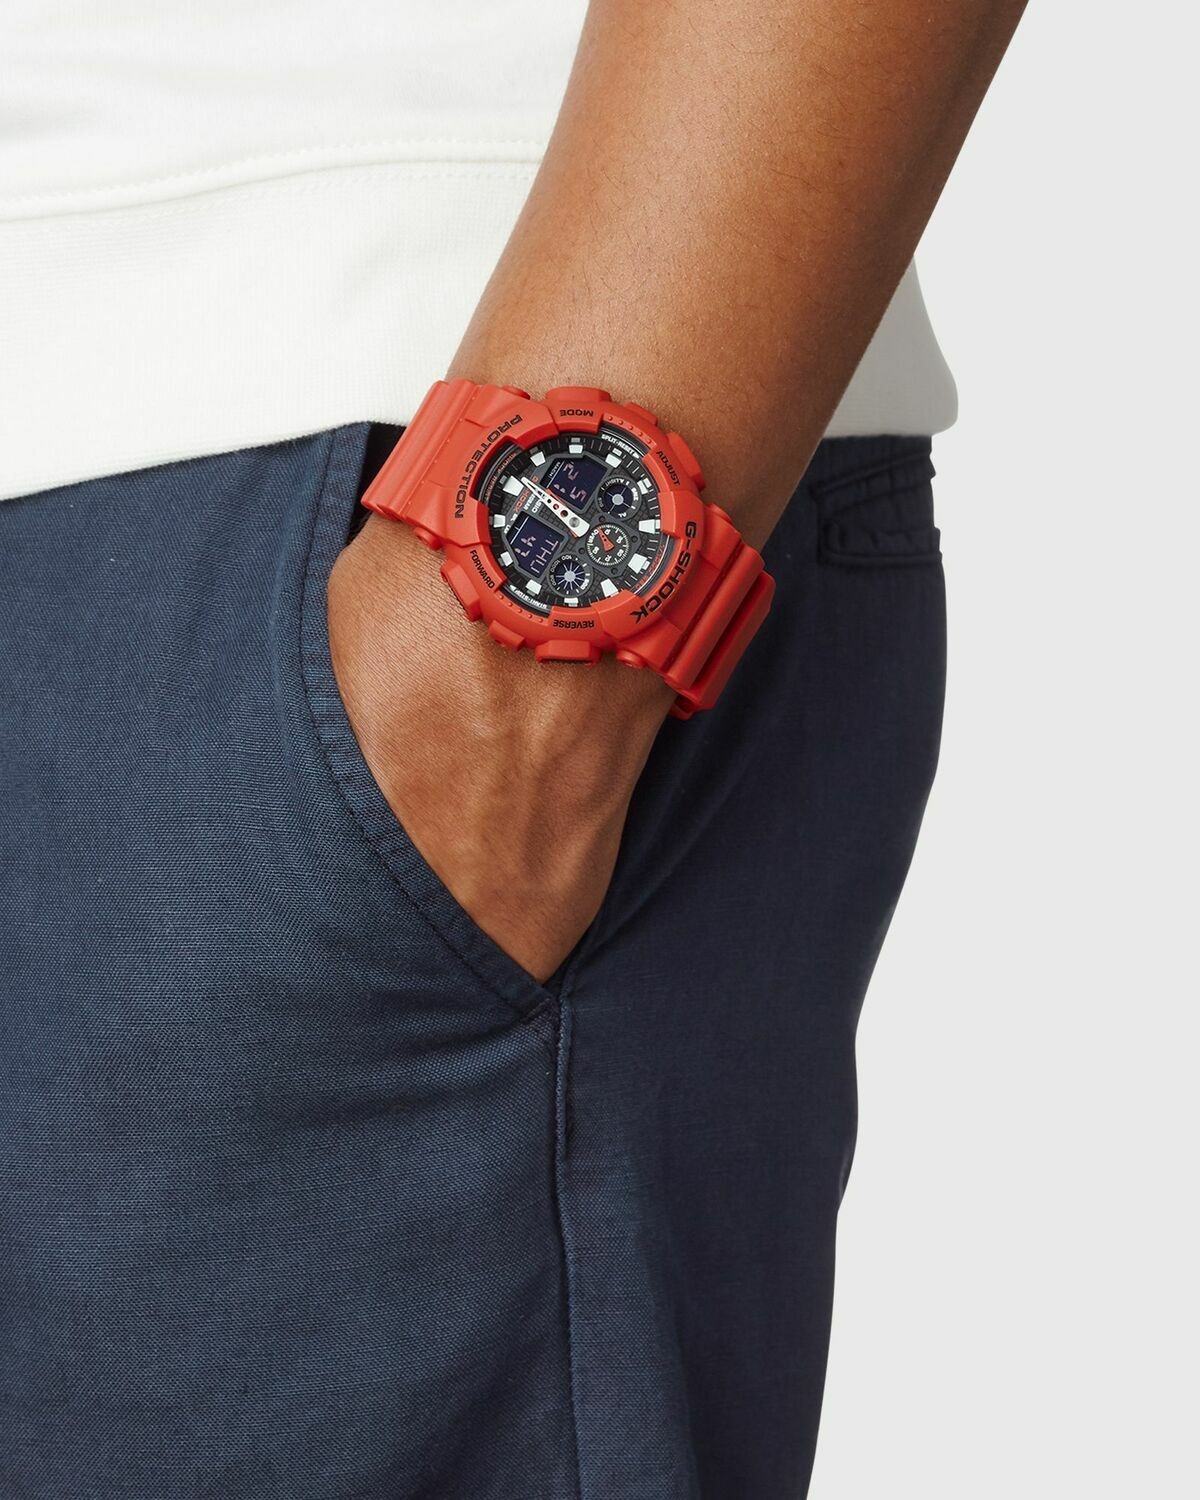 Casio G Shock Ga 100 B 4 Aer Red - Mens - Watches Casio